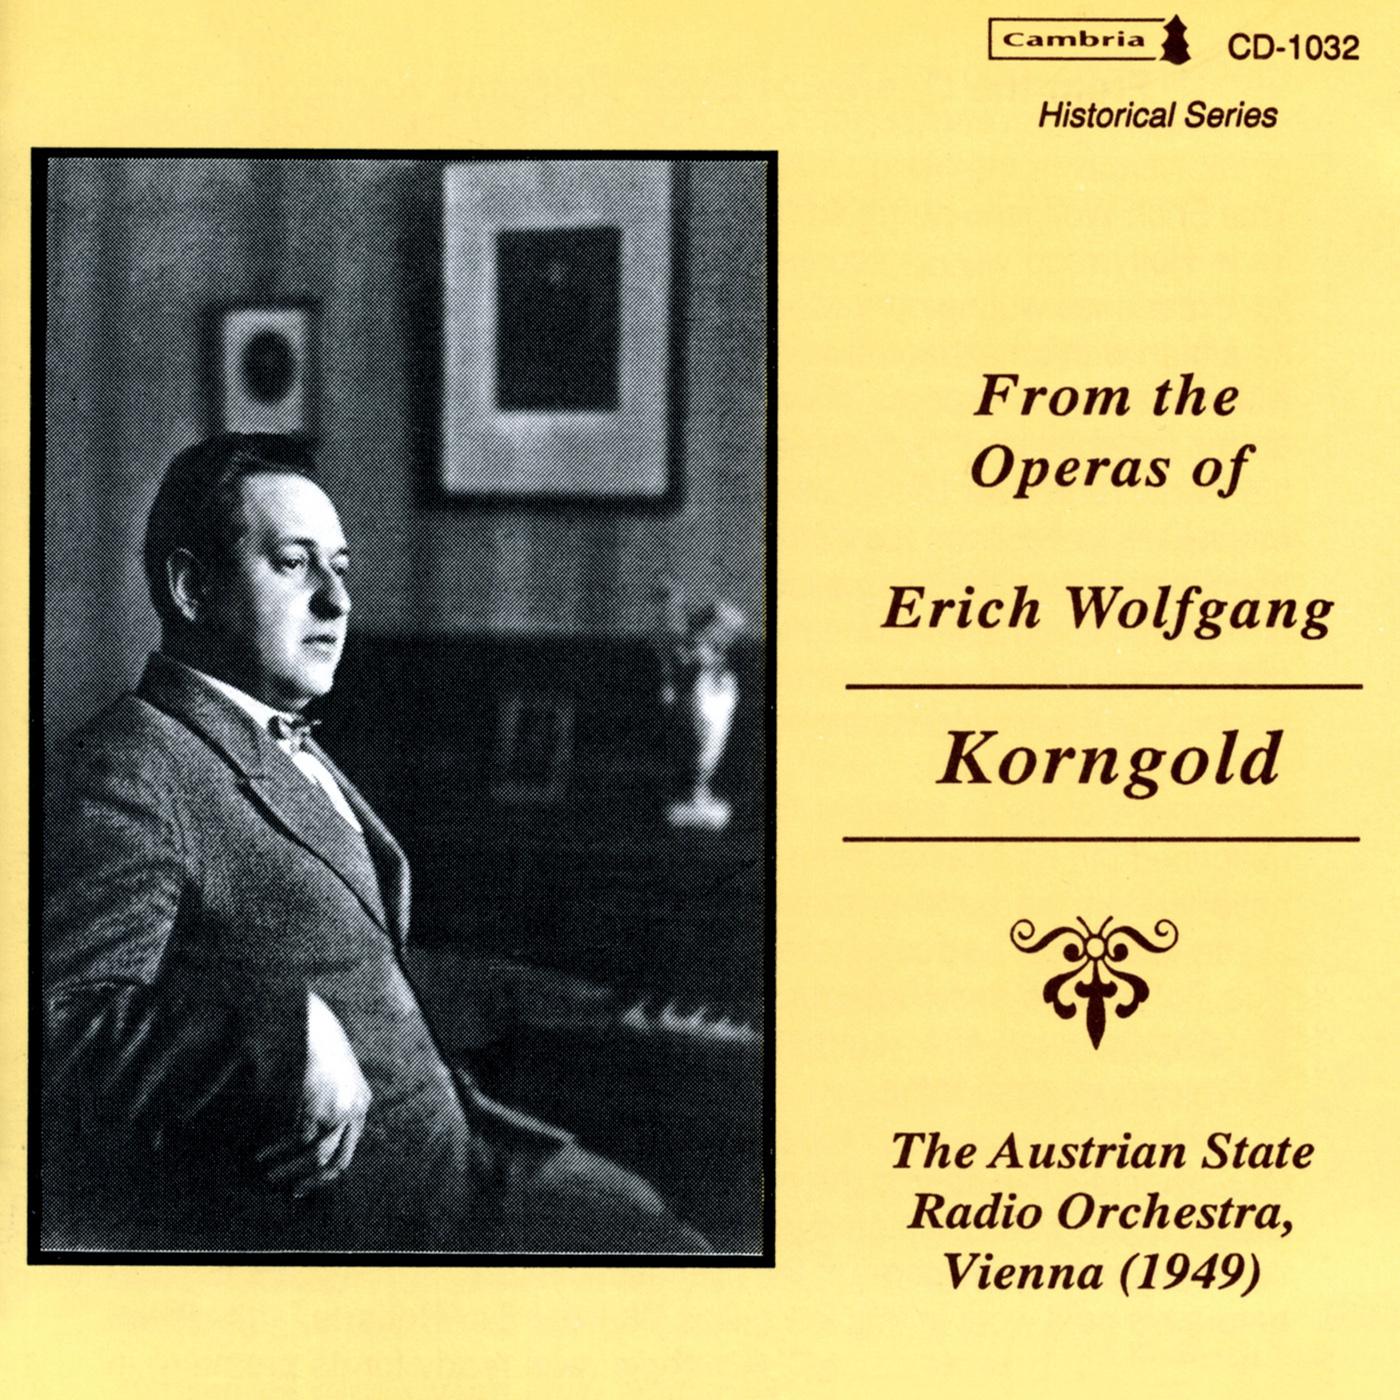 KORNGOLD, E.W.: Opera Arias (From the Operas of Erich Wolfgang Korngold) (Korngold) (1949)